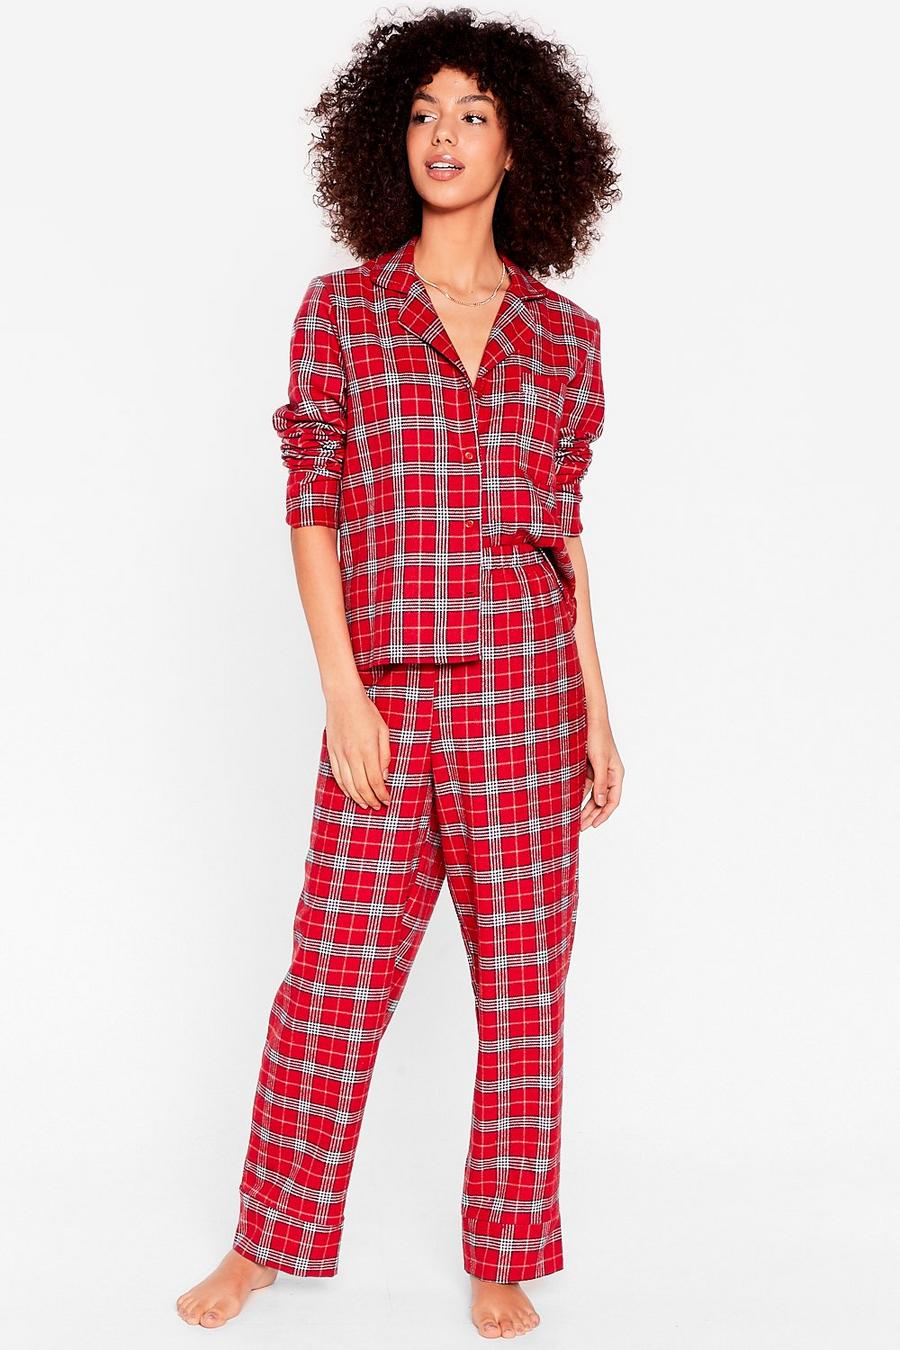 Get Some Sleep Shirt and Trousers Pyjama Set